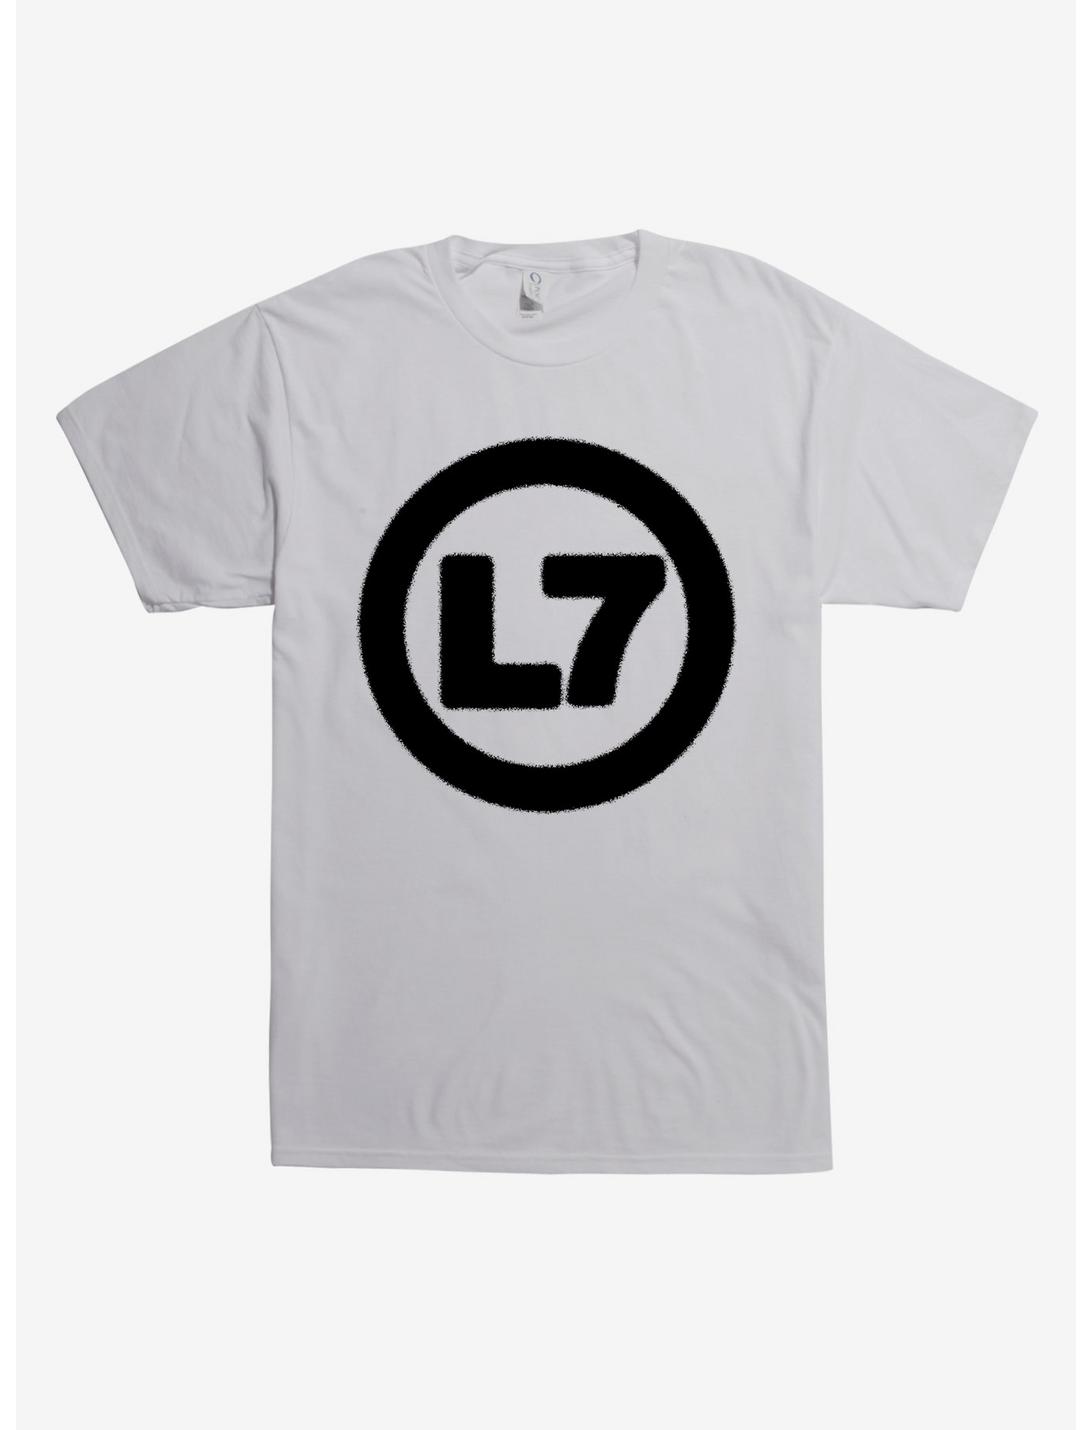 L7 Spray Logo T-Shirt, SILVER, hi-res